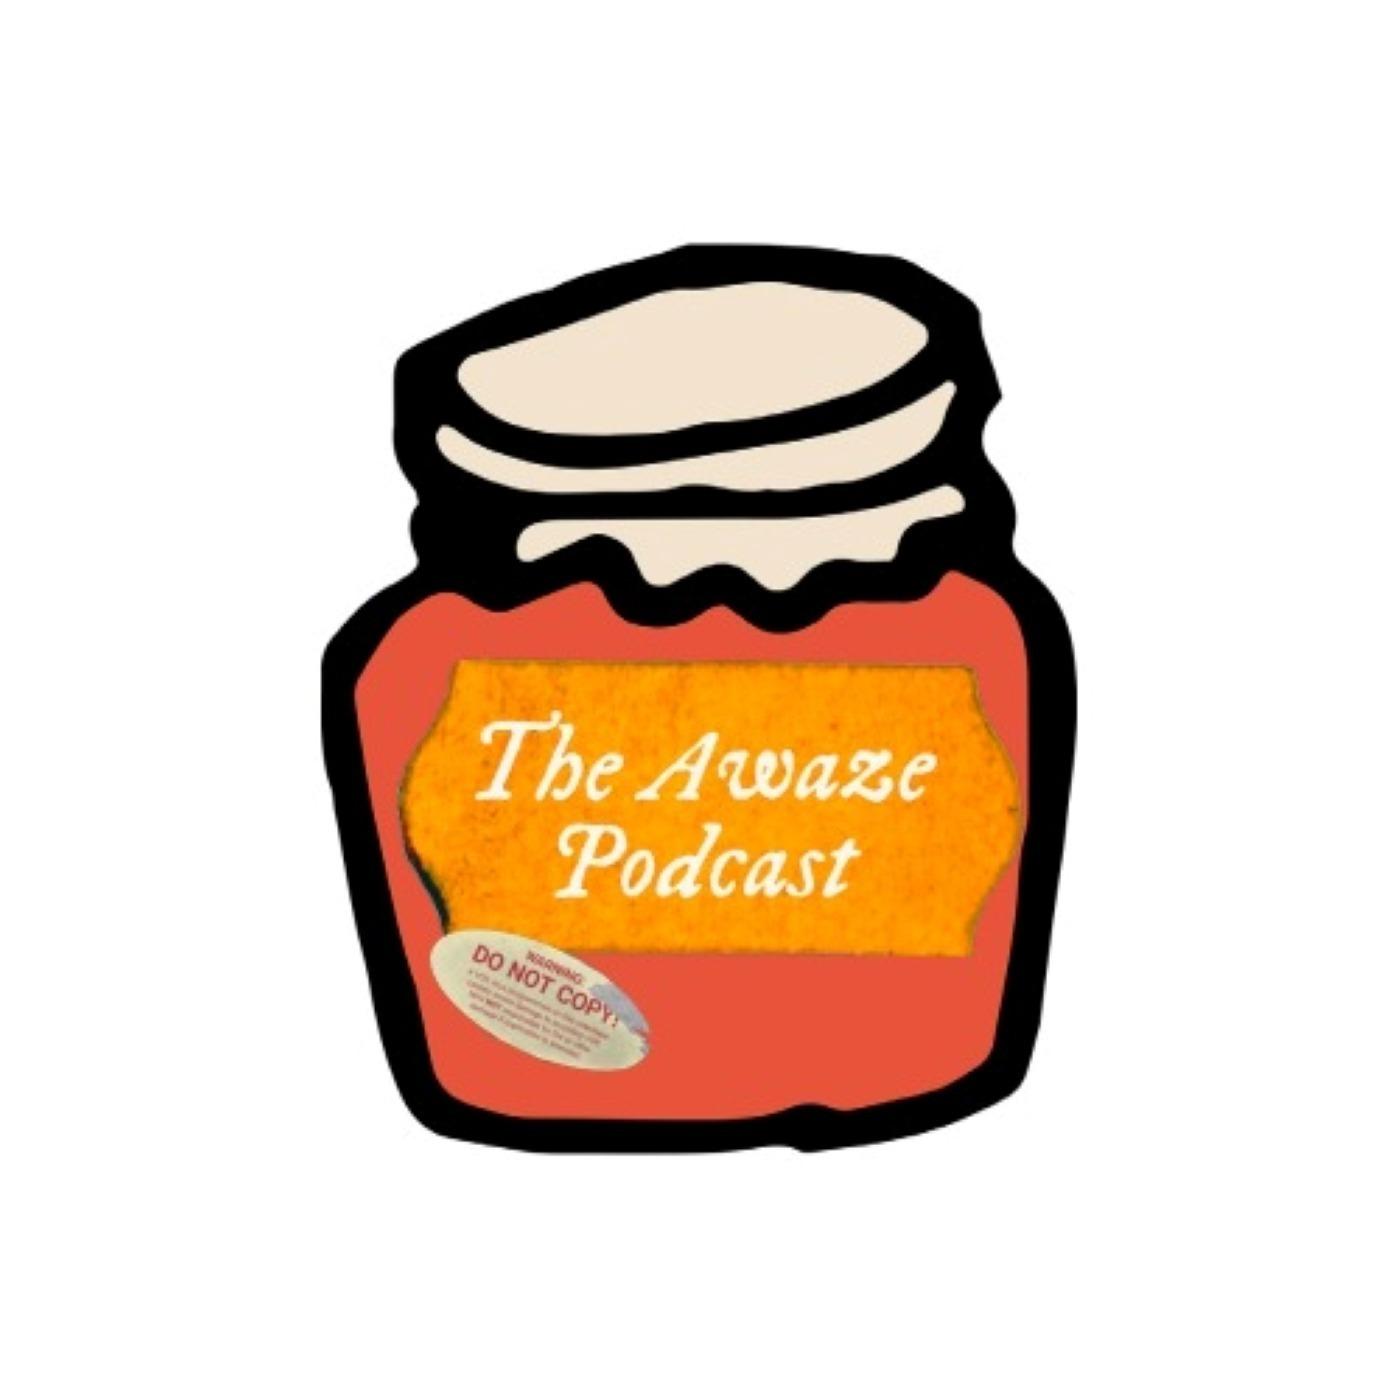 The Awaze Podcast